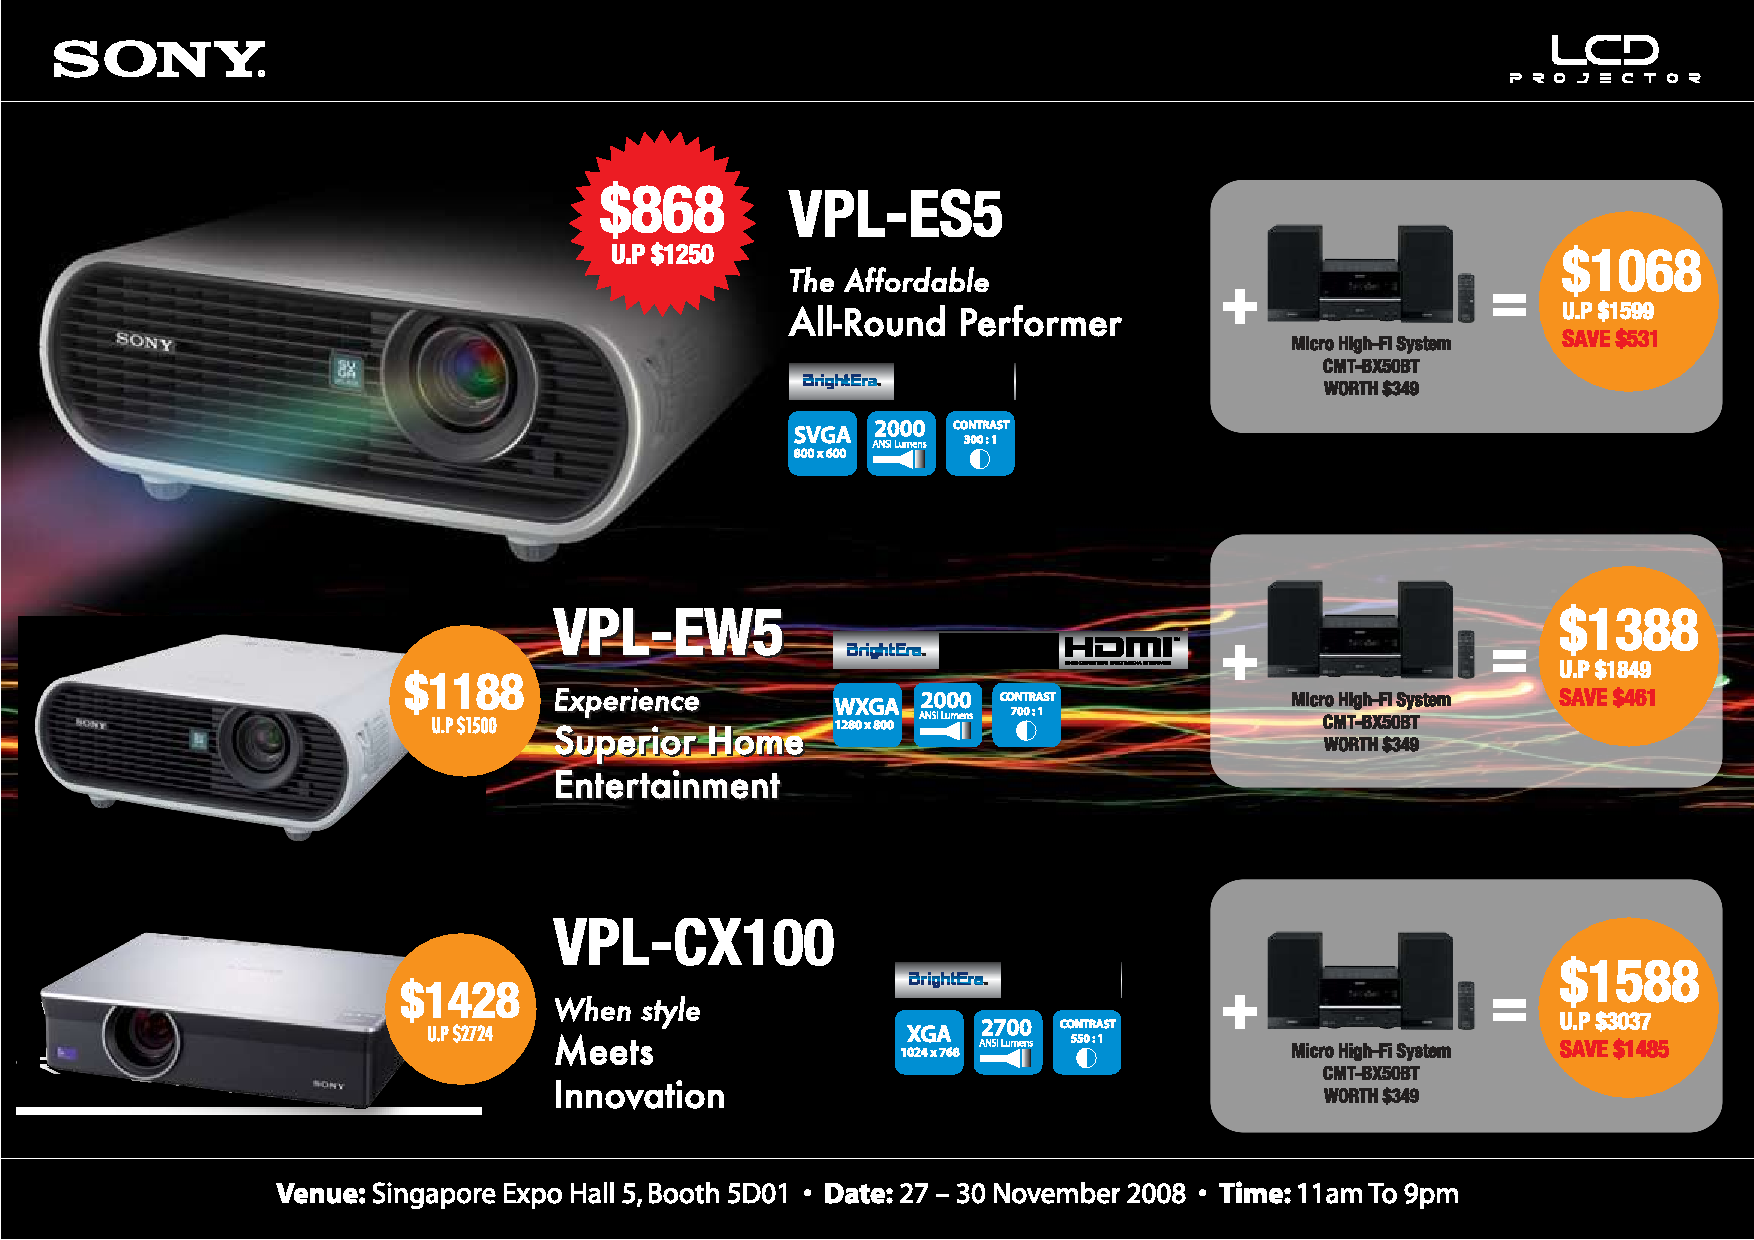 Sitex 2008 price list image brochure of Sony Projectors Bpp1